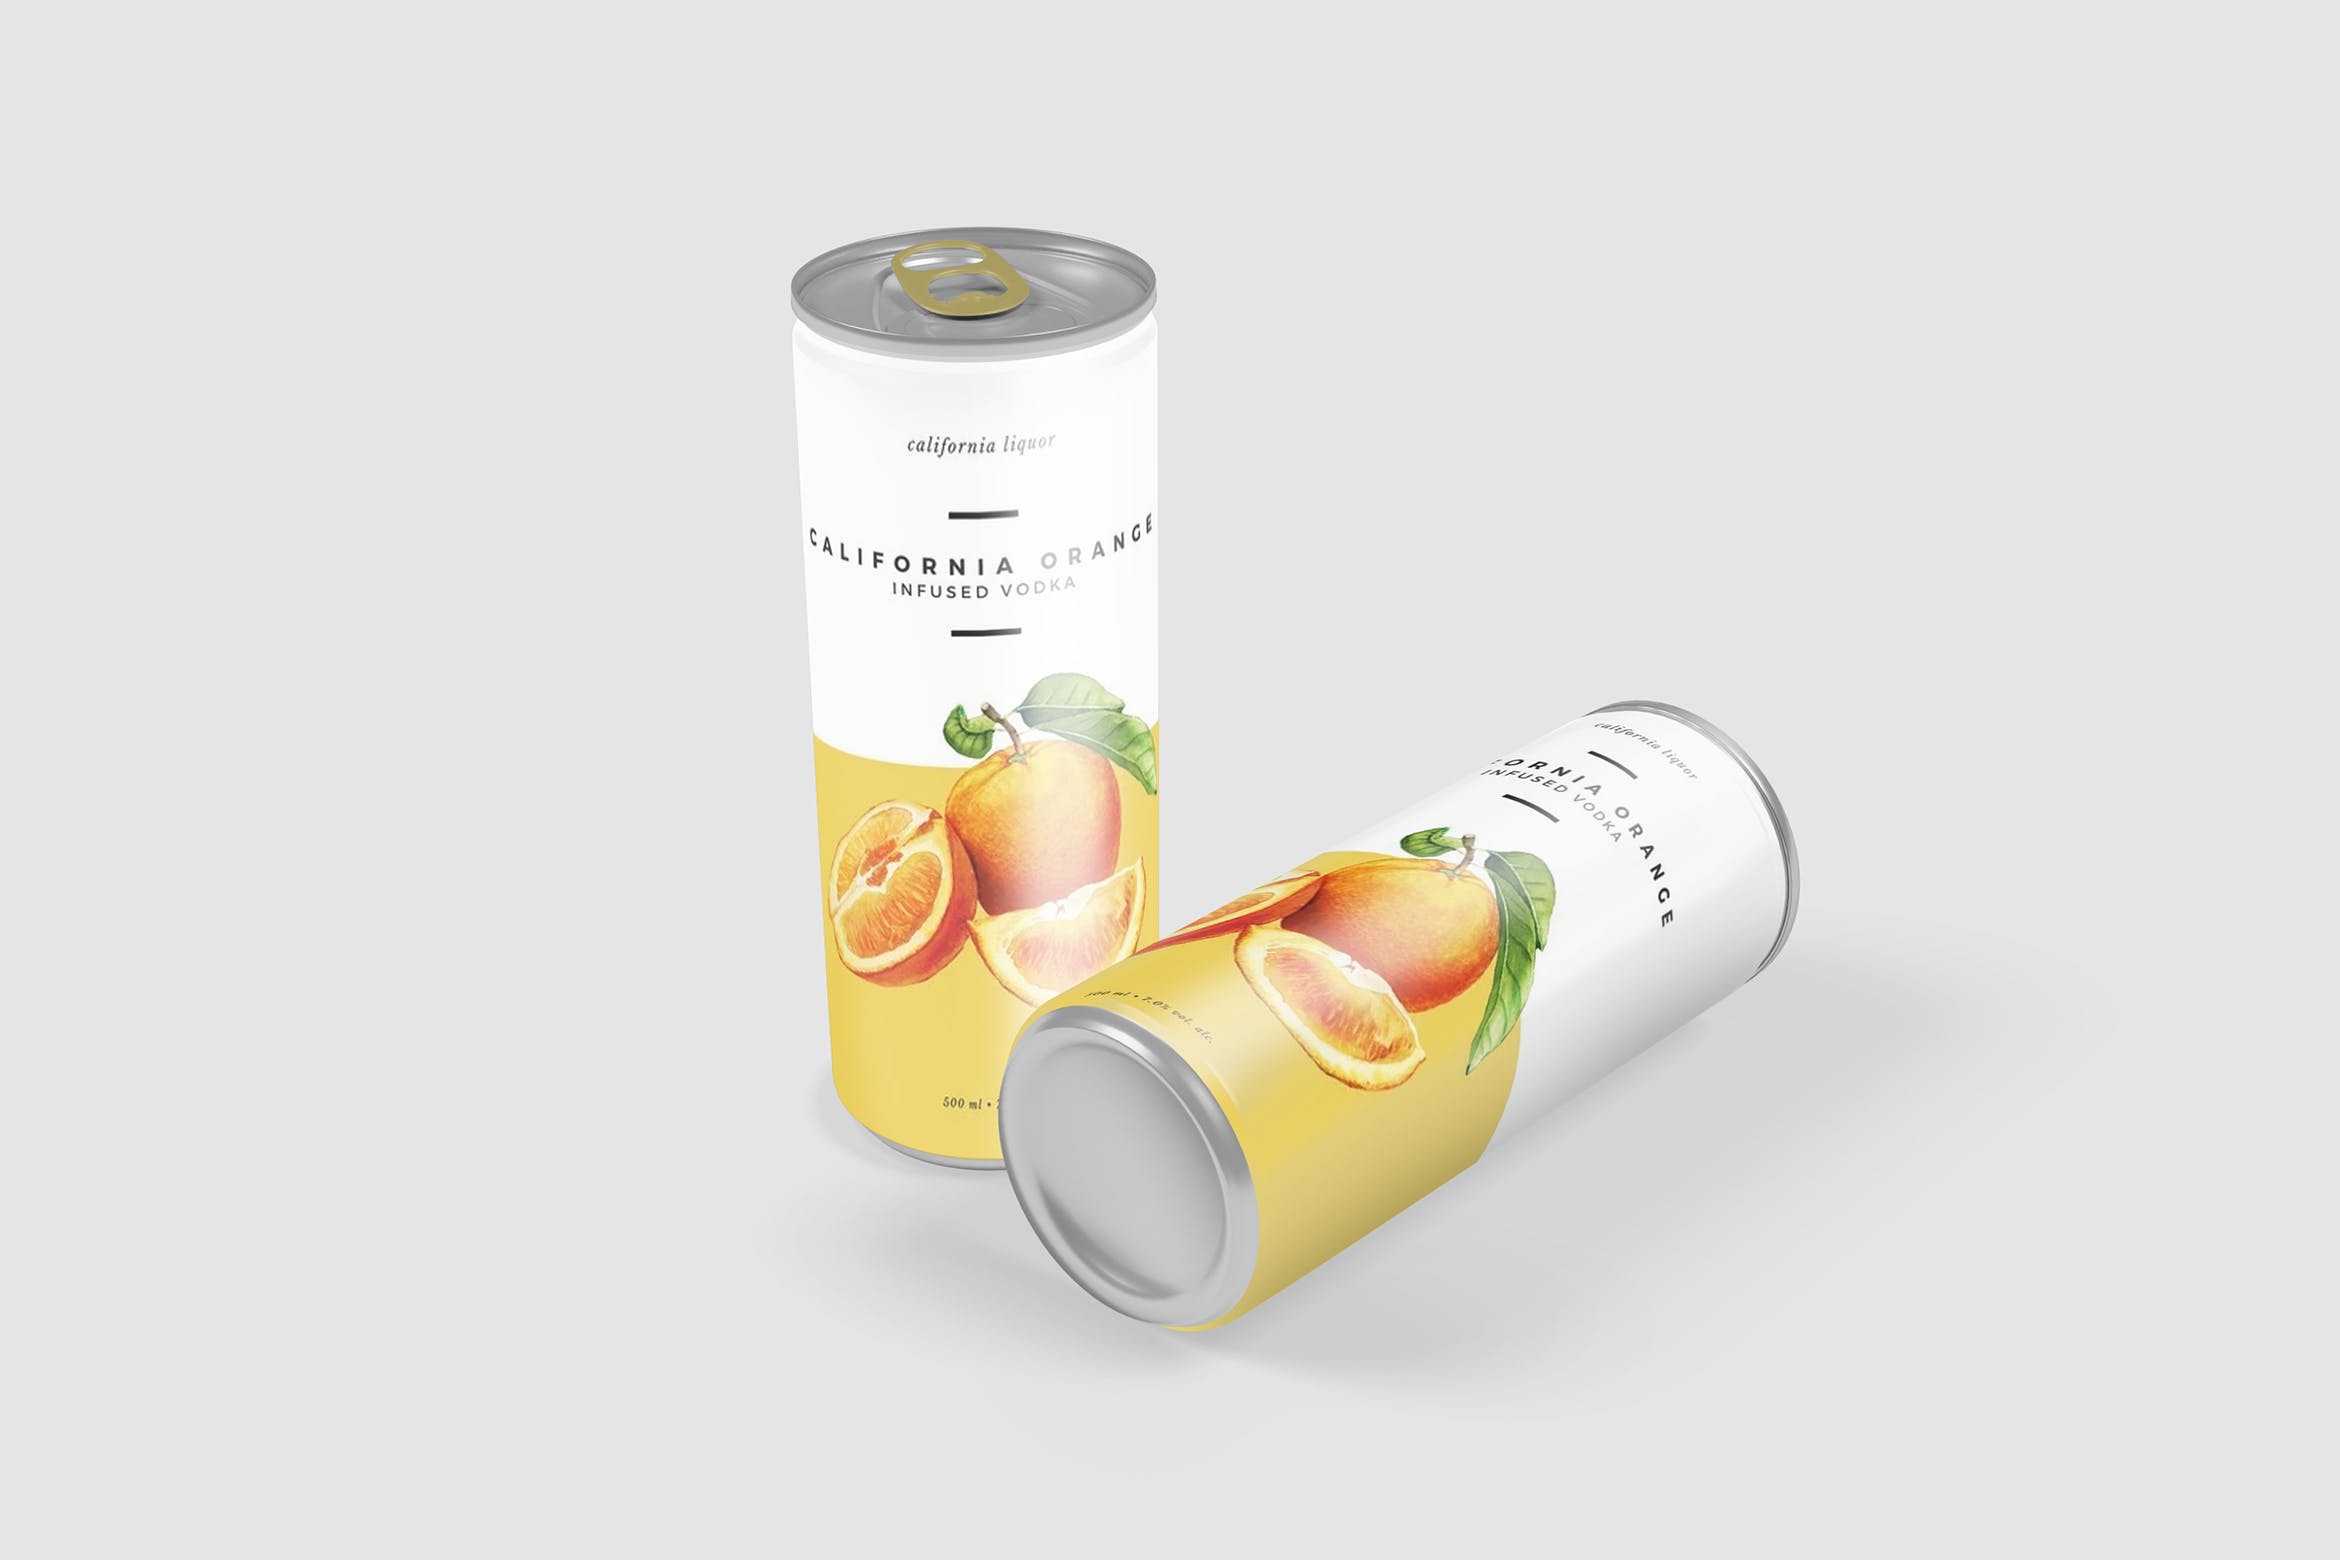 软饮料罐头产品外观设计16图库精选 Softdrink Can Product Mockup插图